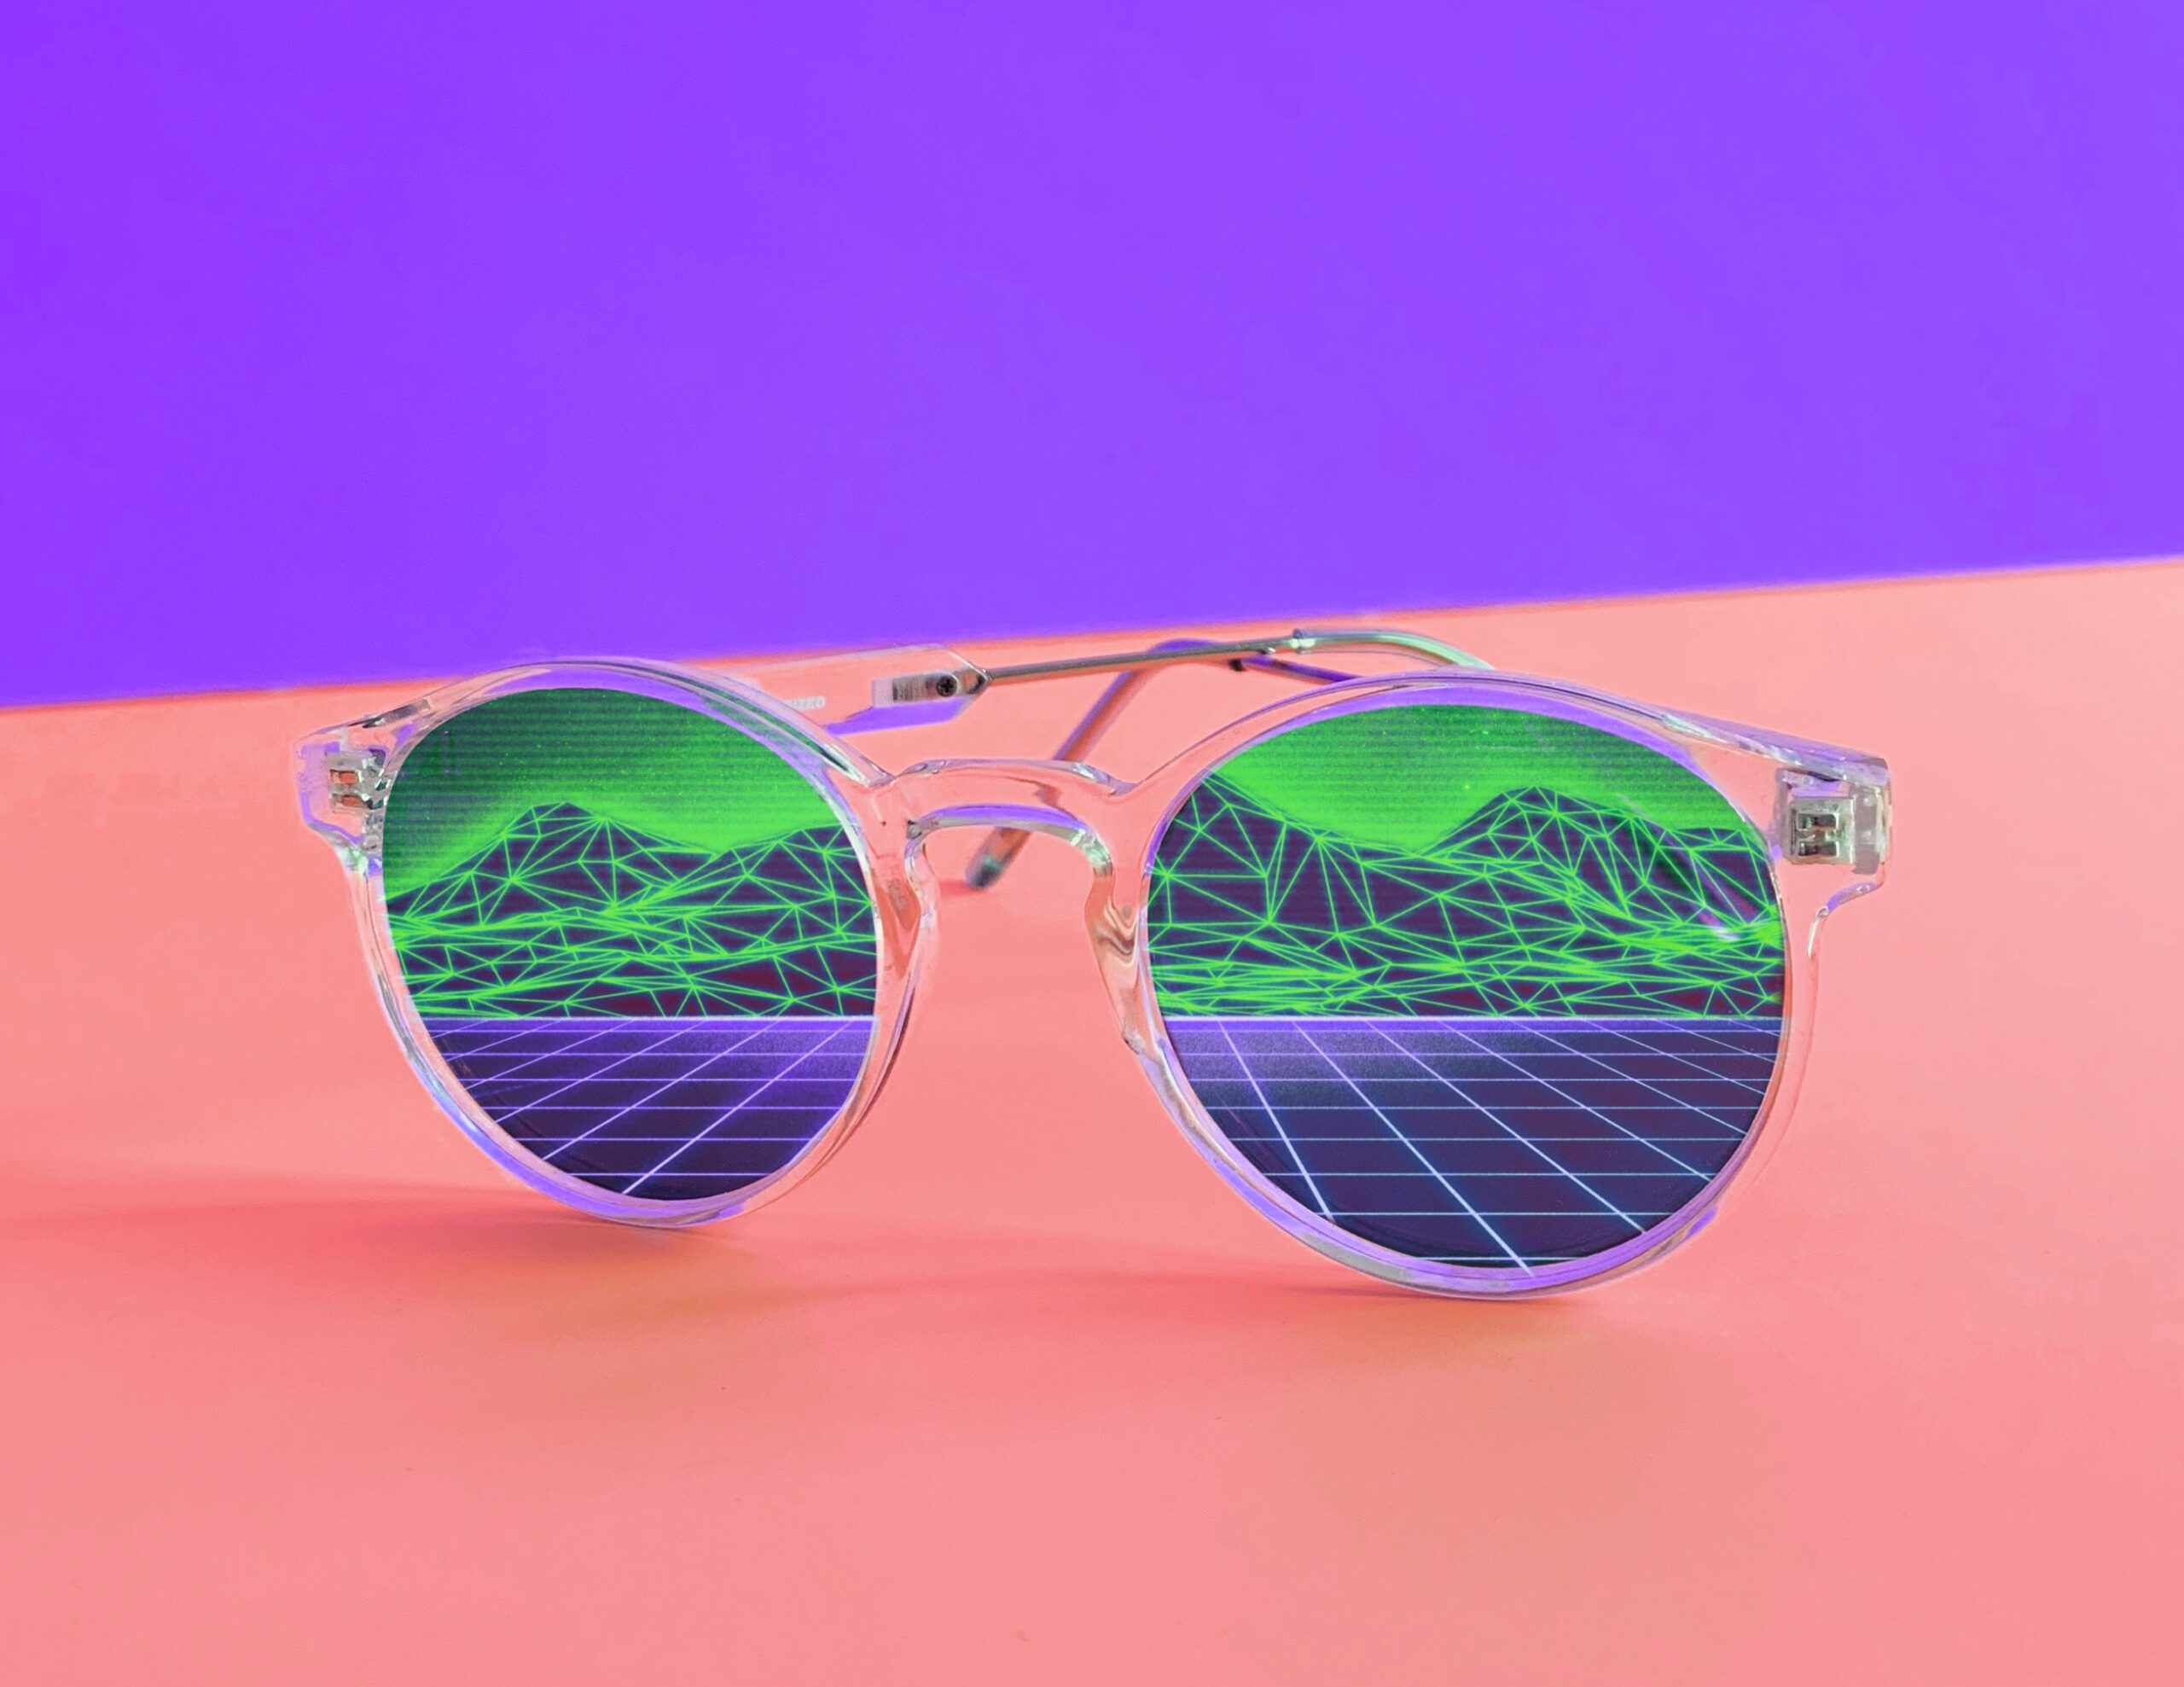 An image of sunglasses reflecting a digital landscape